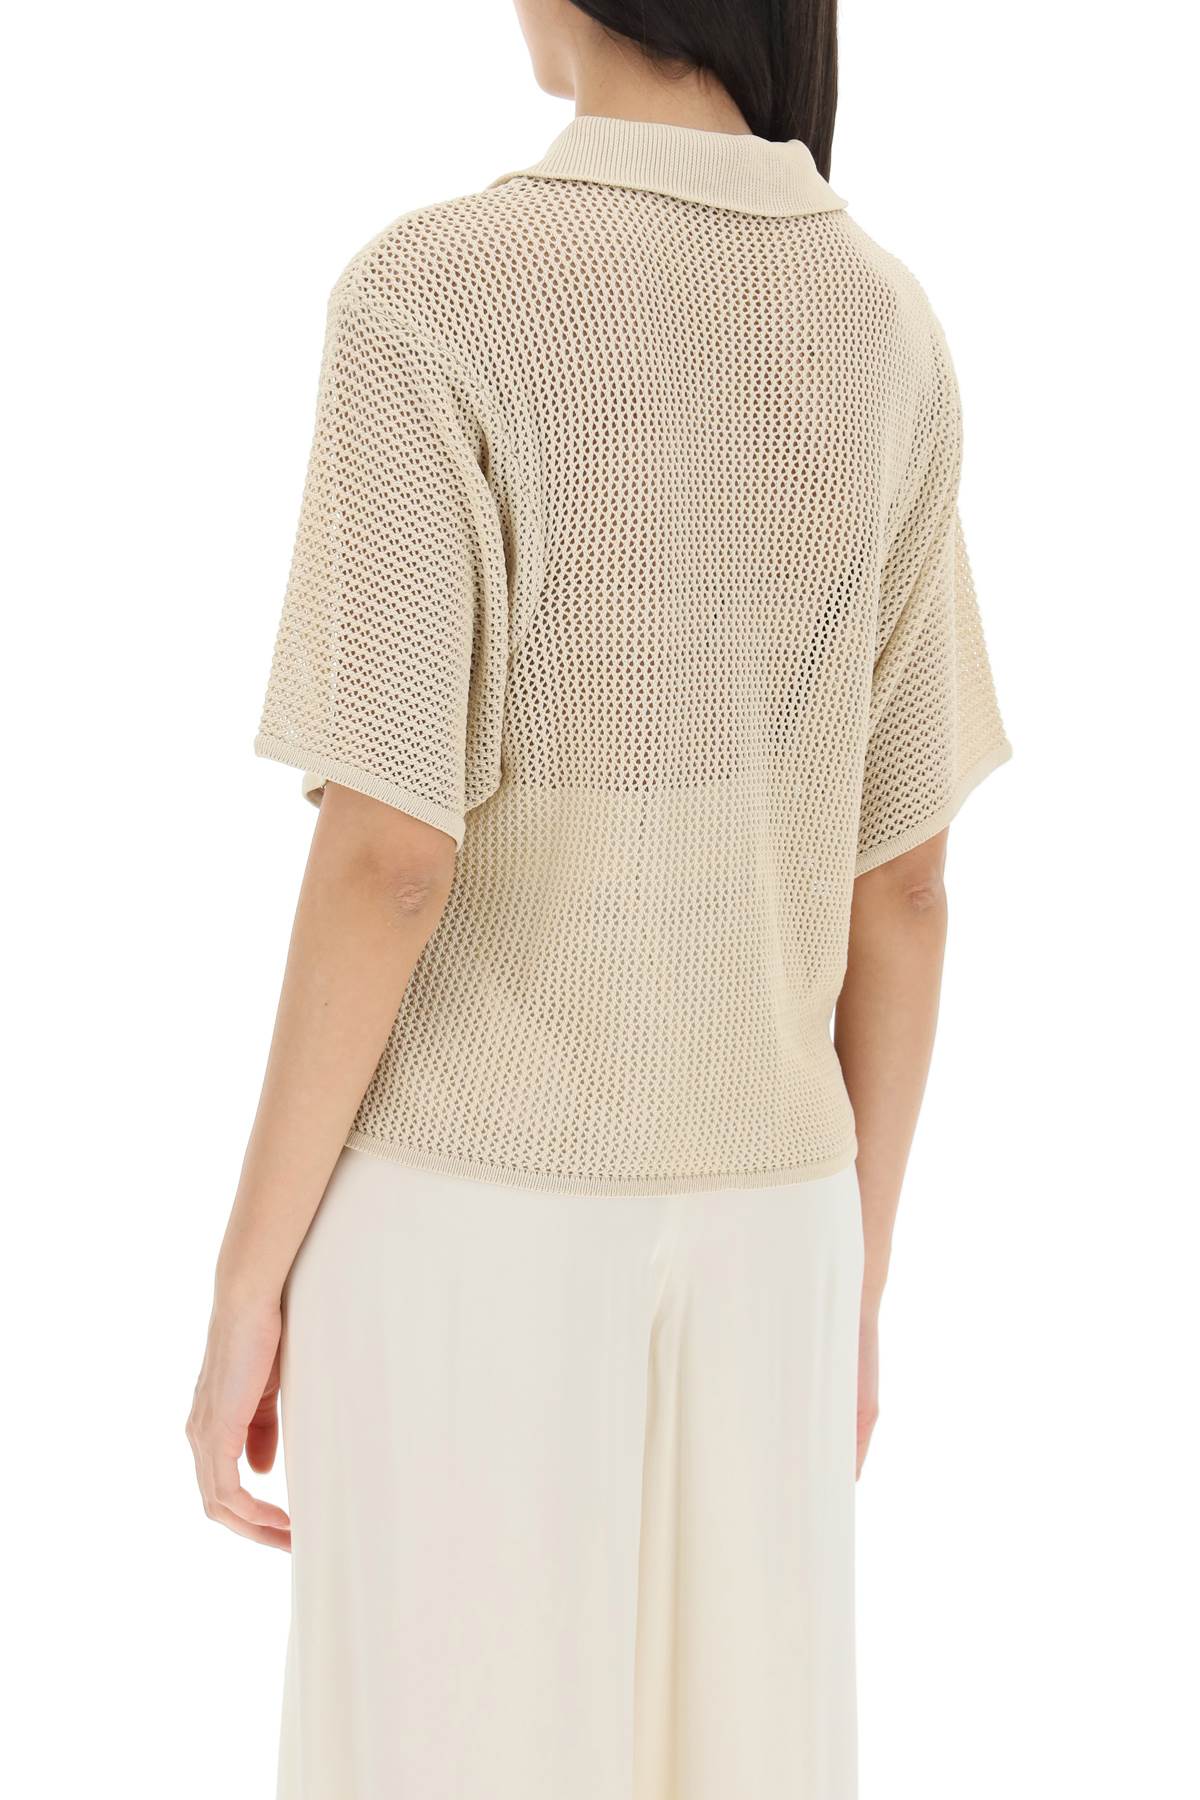 Mvp wardrobe 'pfeiffer' stretch knit polo shirt-2